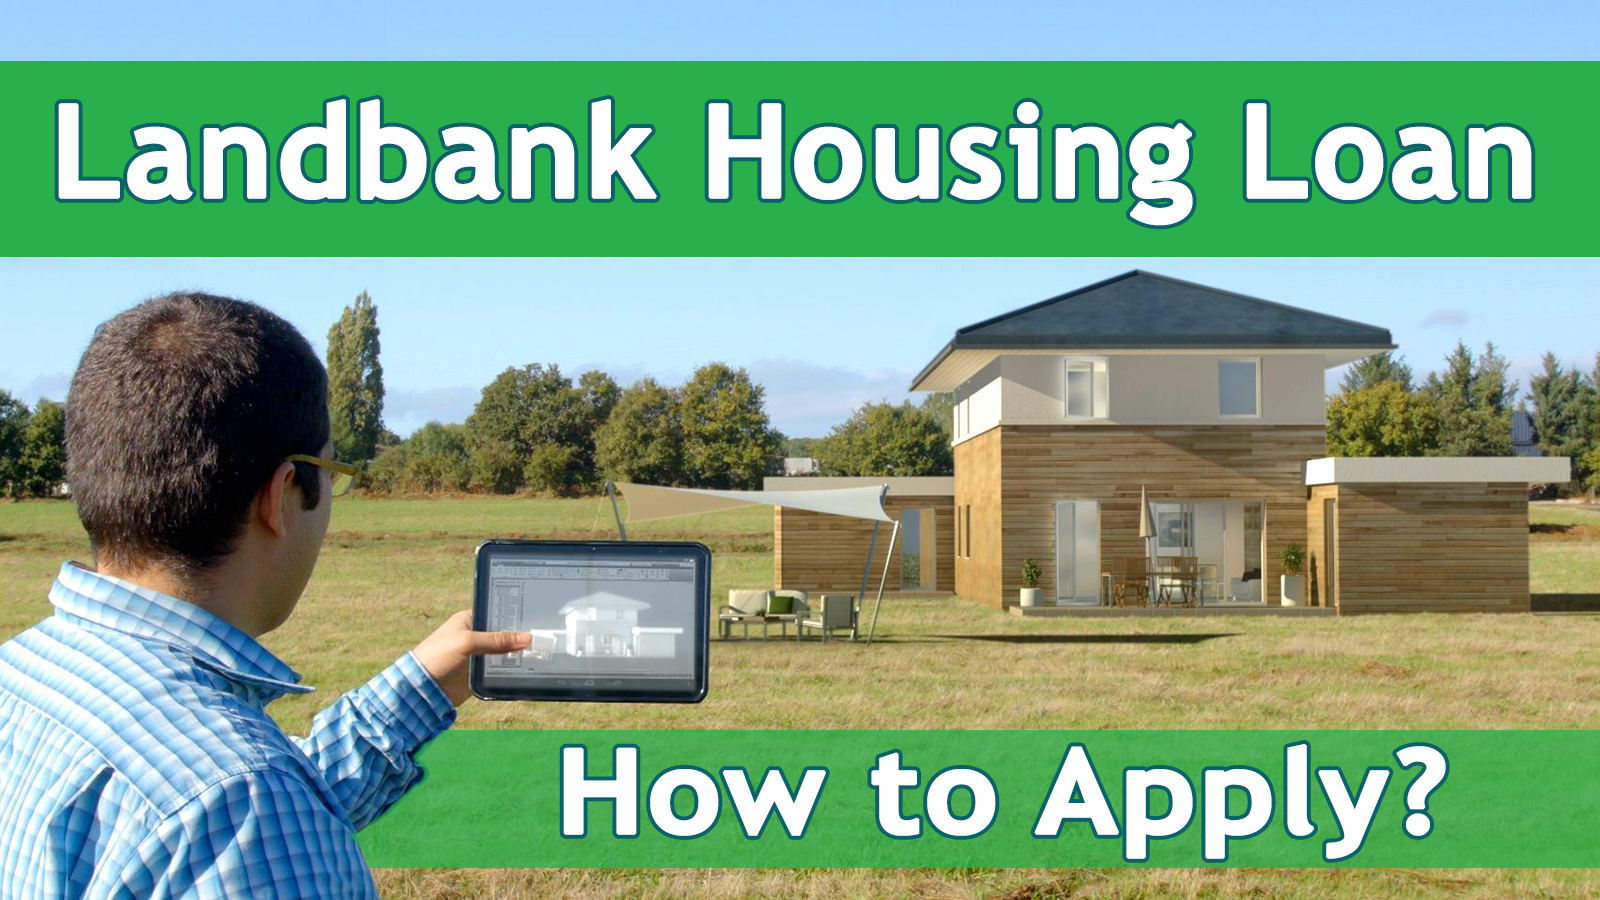 Landbank Housing Loan - How to Apply